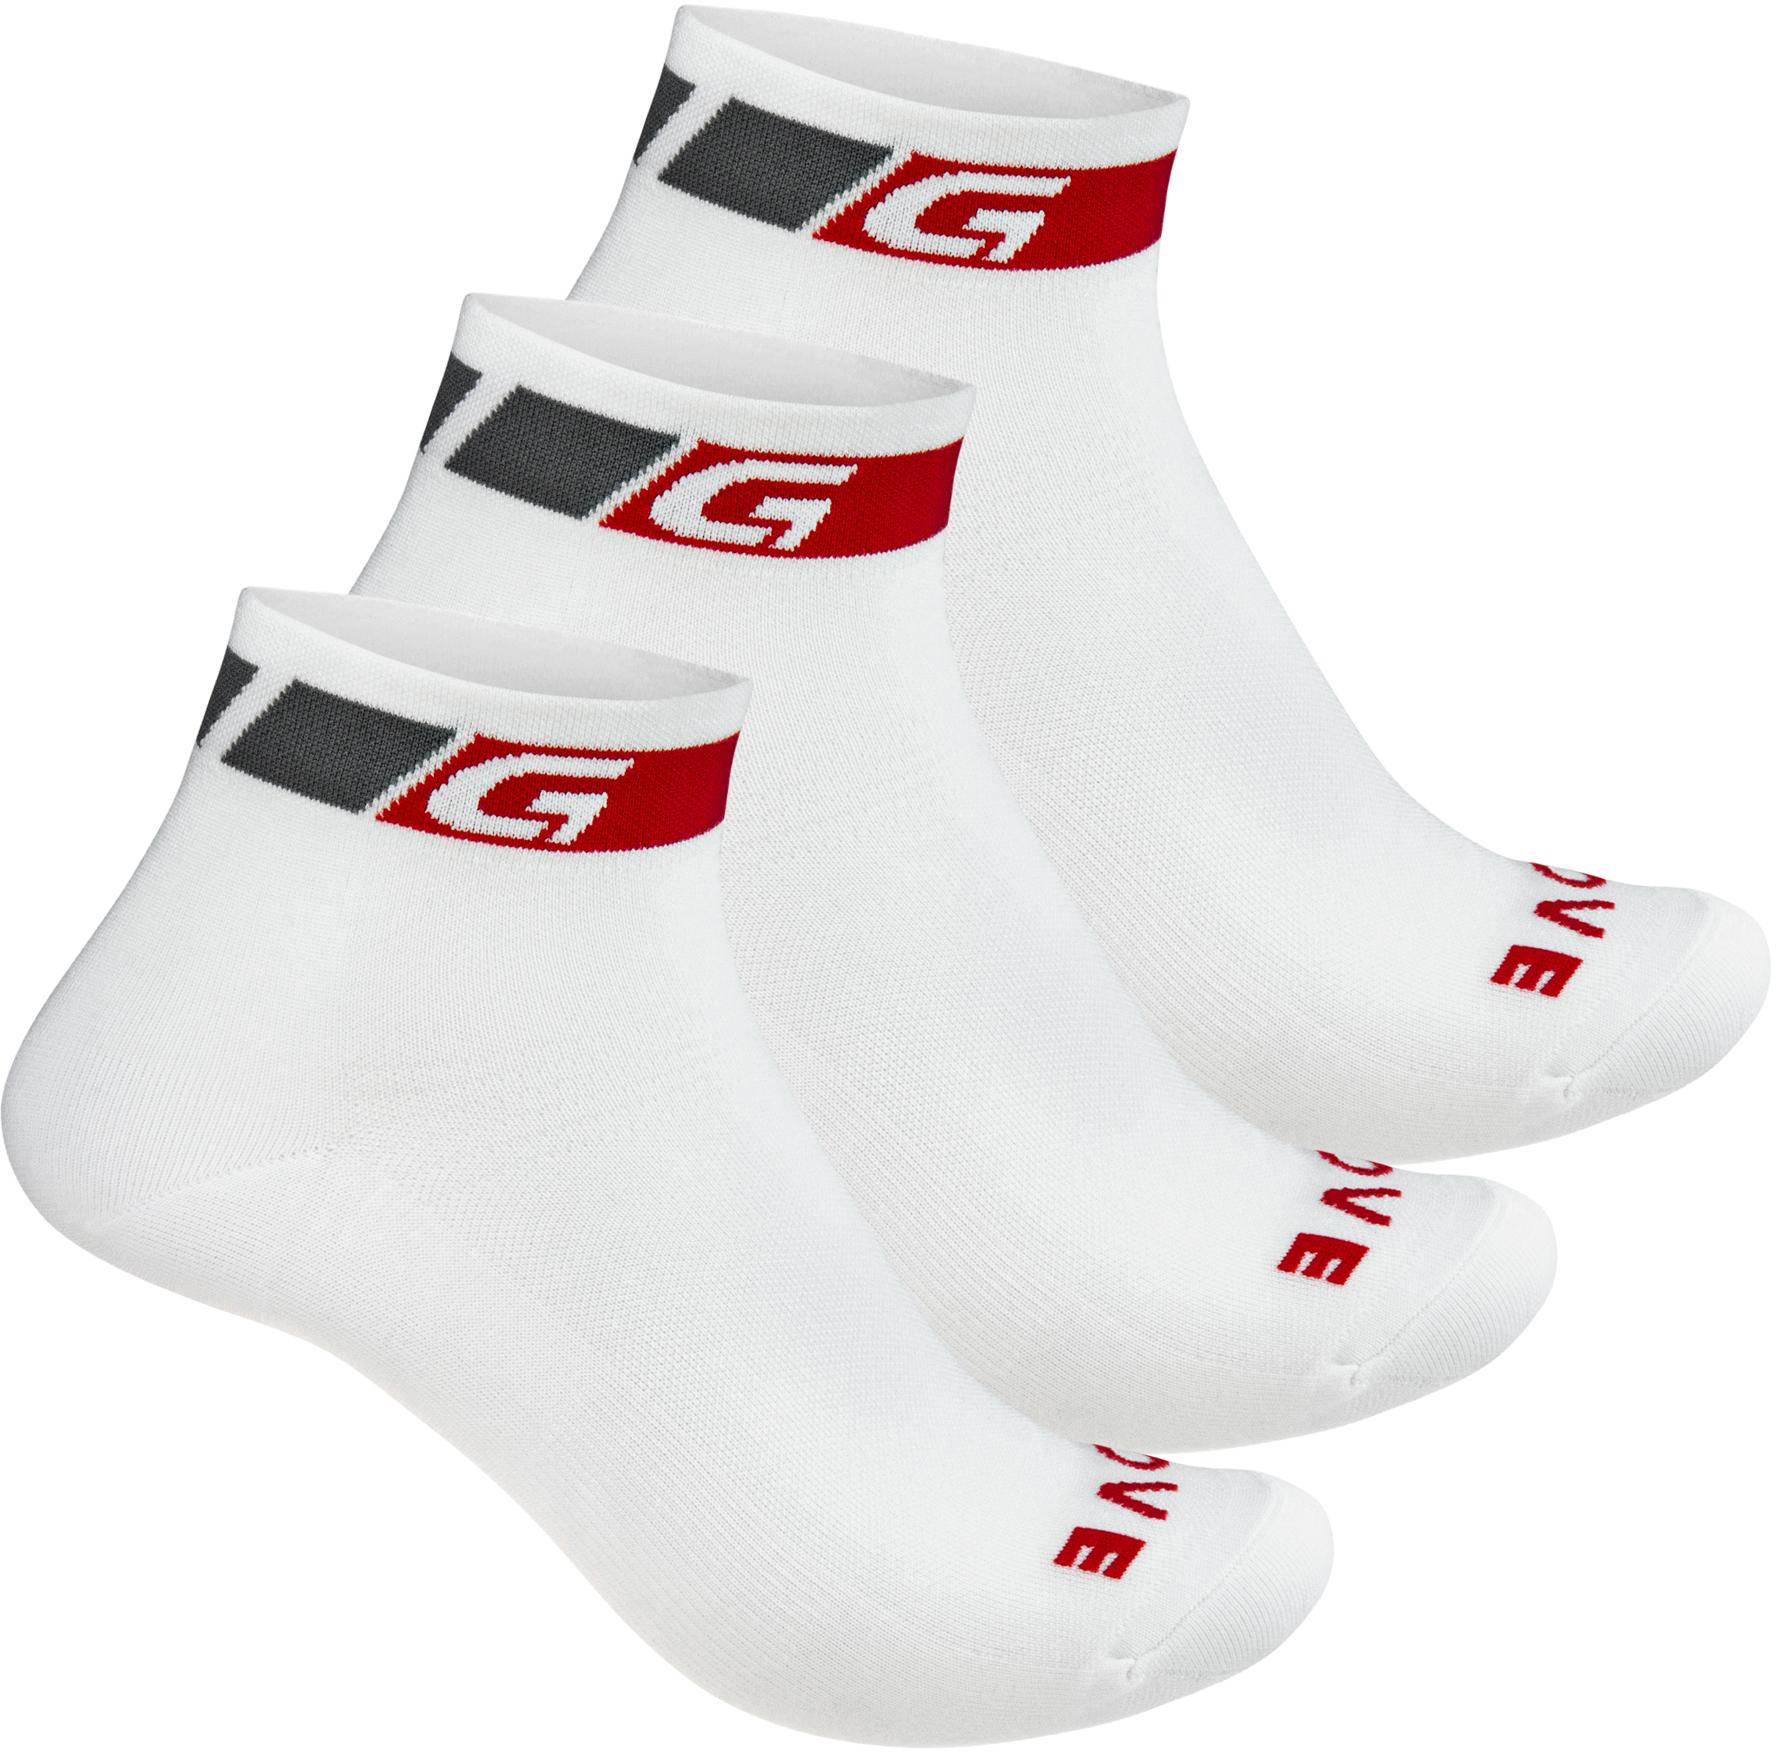 Gripgrab Classic Low Cut Socks (3pack) - White